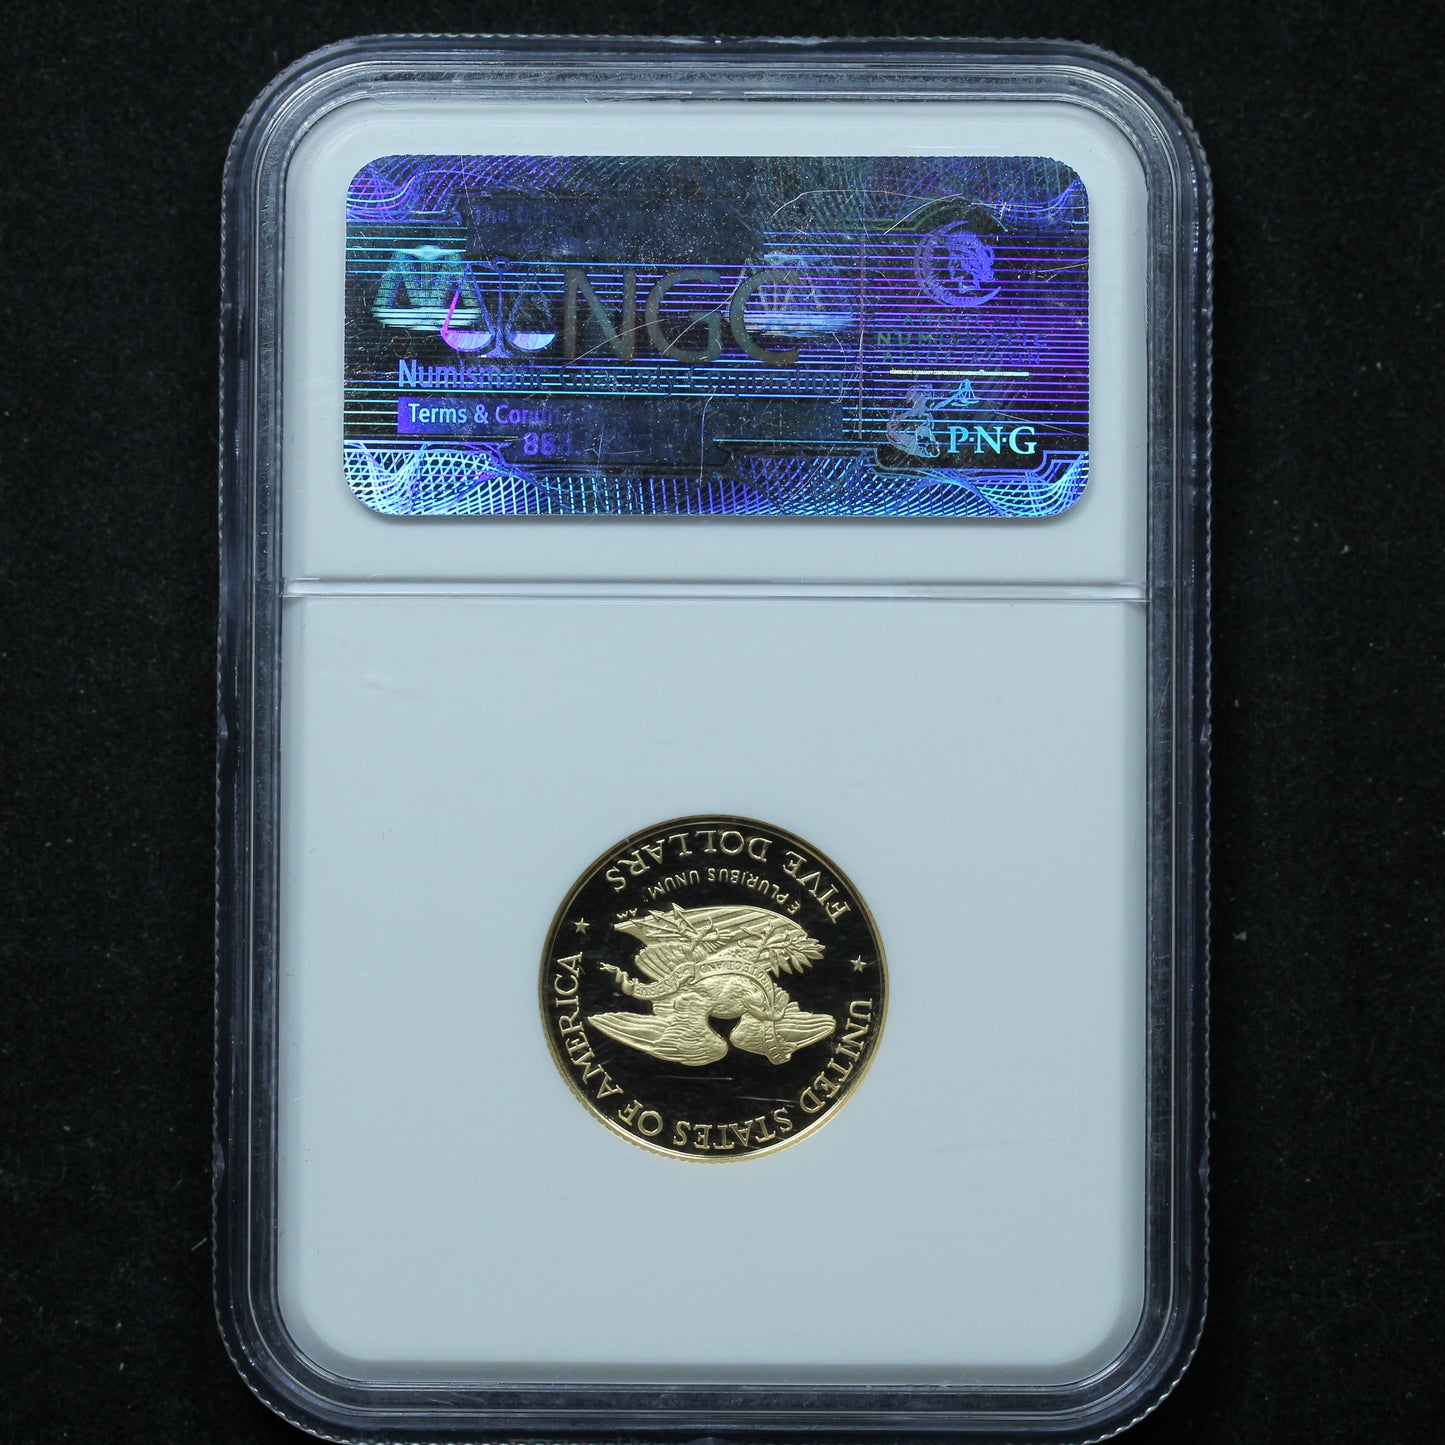 1995 W Gold $5 Commemorative Civil War Proof - NGC PF 70 Ultra Cameo